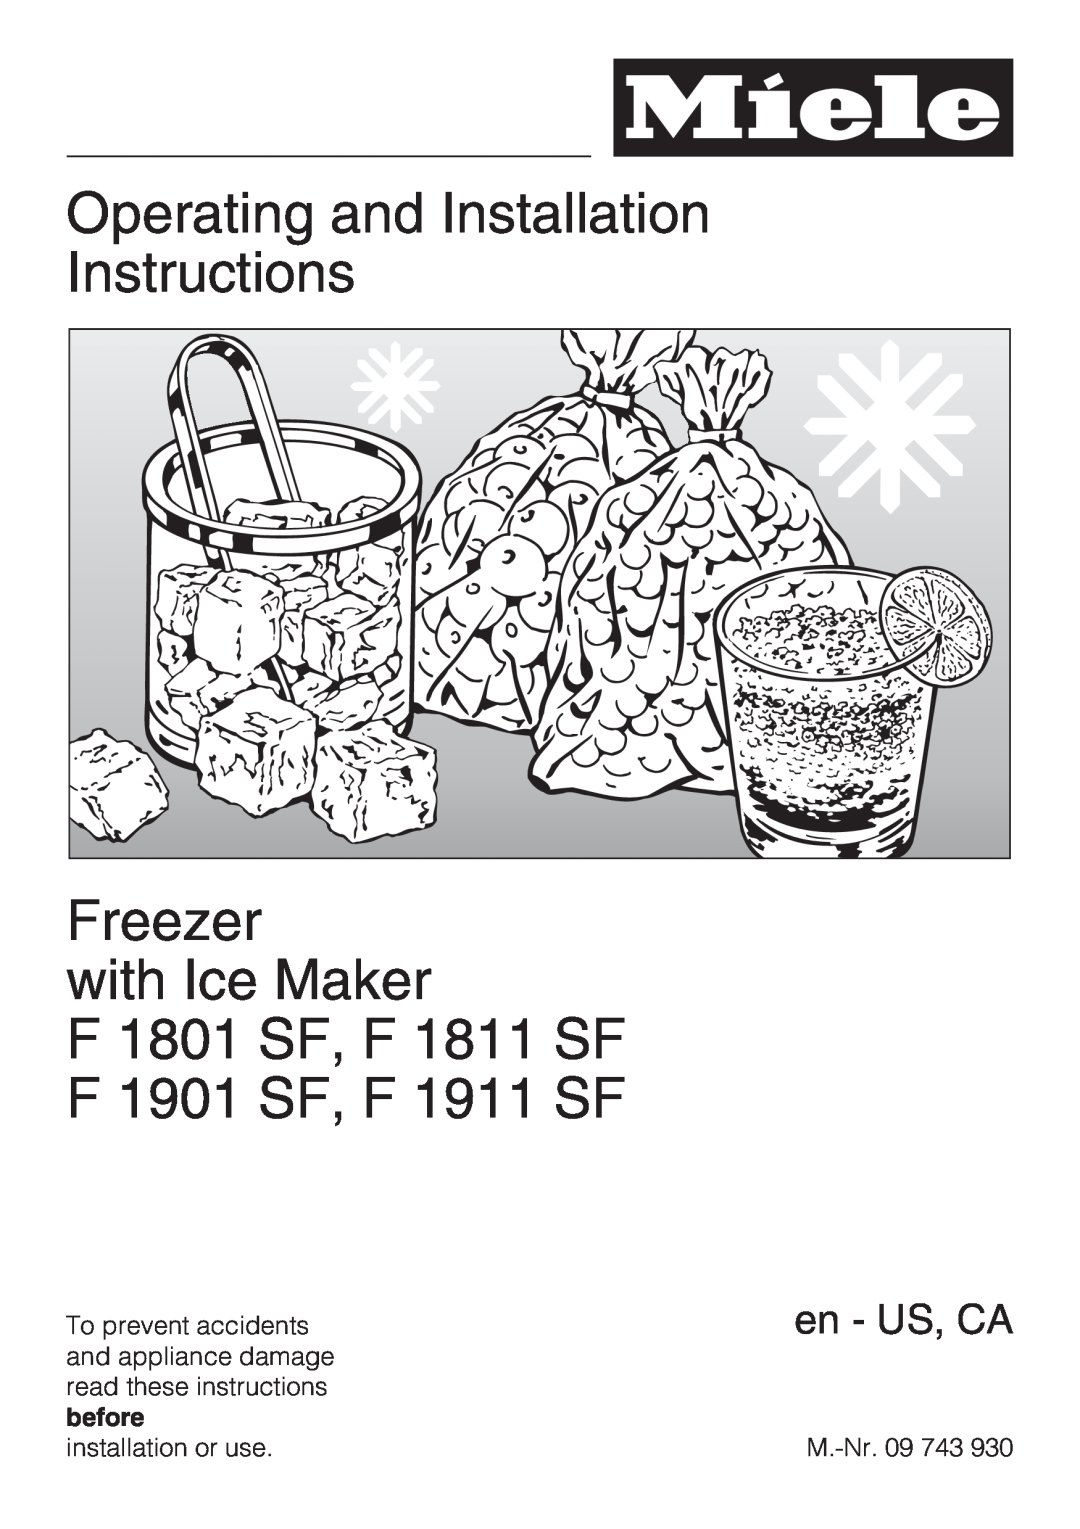 Miele F 1801 SF installation instructions Operating and Installation Instructions Freezer, with Ice Maker, en - US, CA 